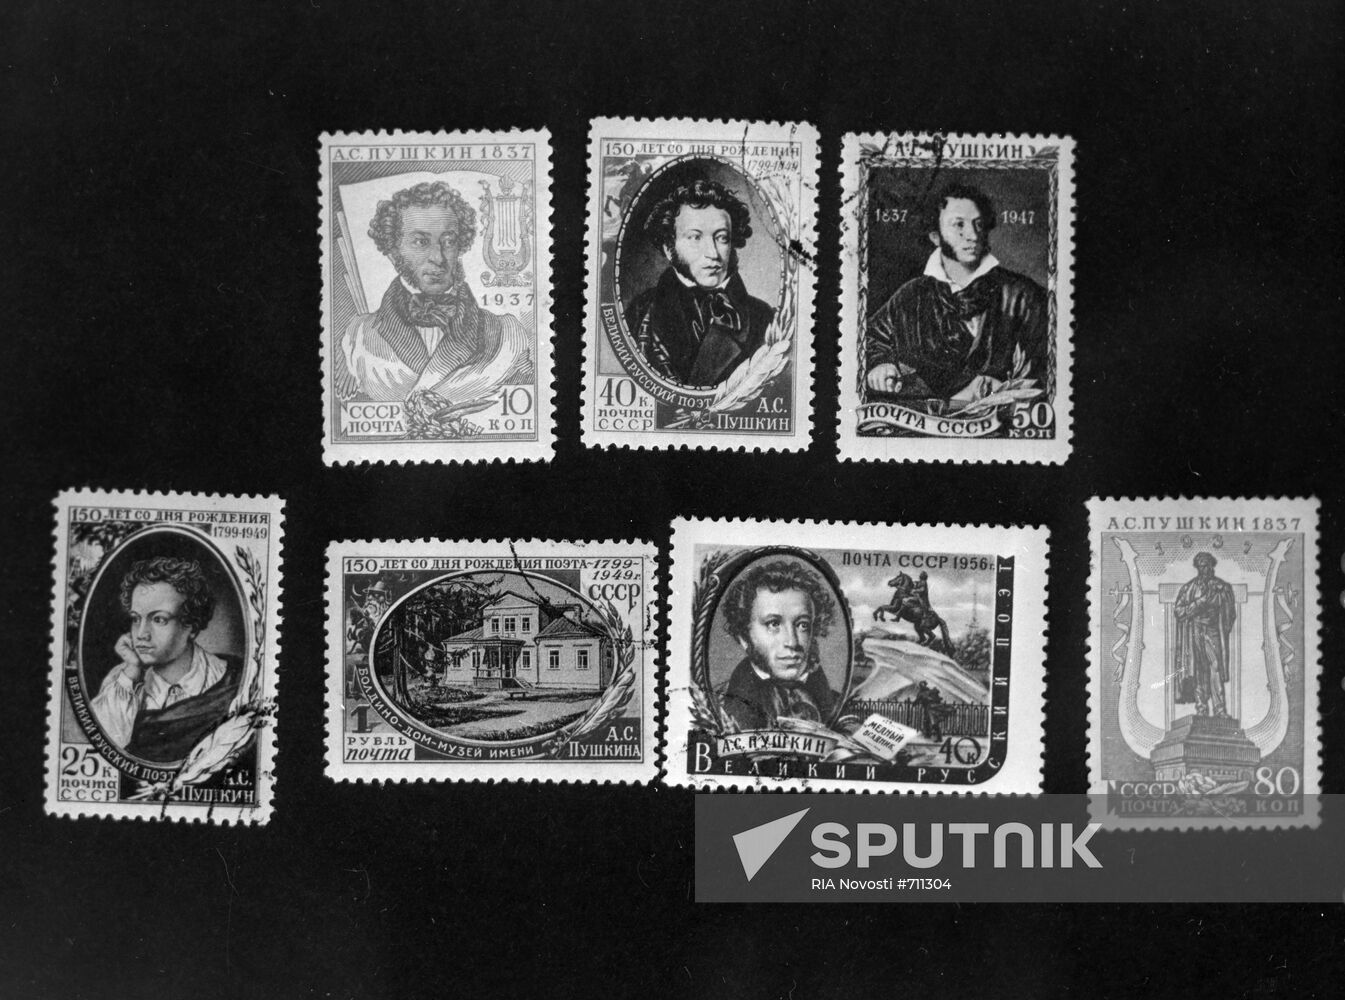 Soviet post stamps dedicated to Alexander Pushkin